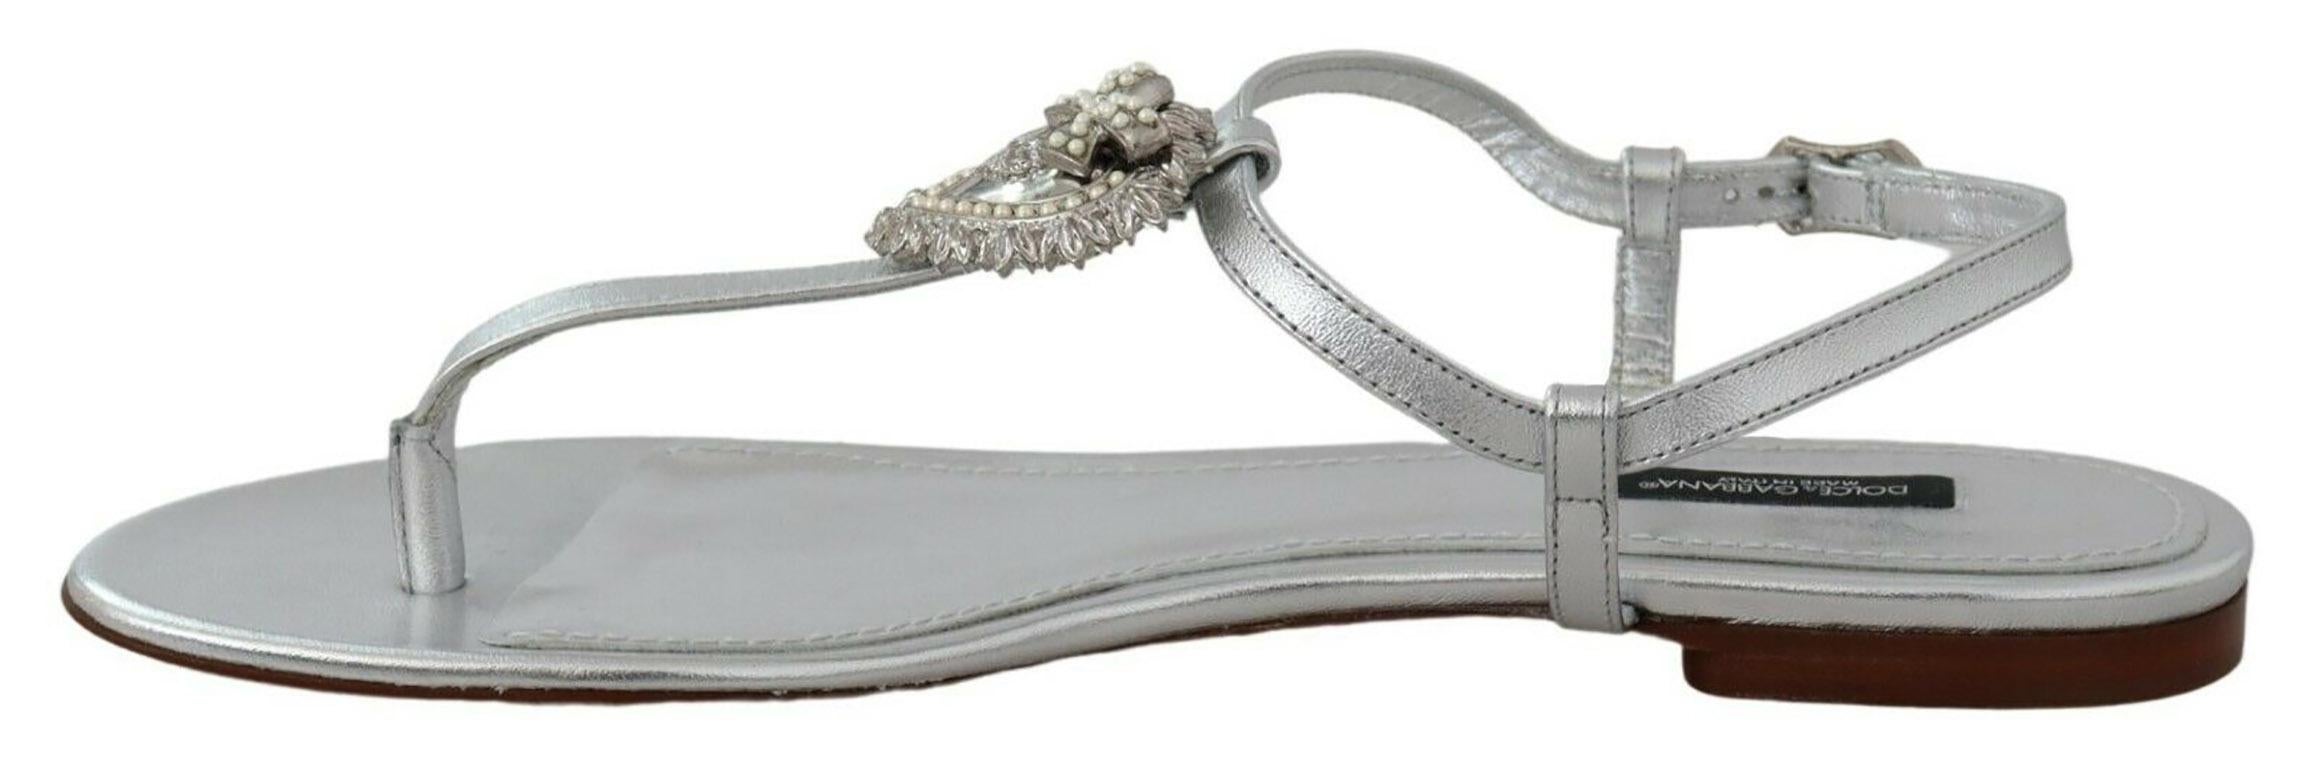 silver dolce & gabbana sandals